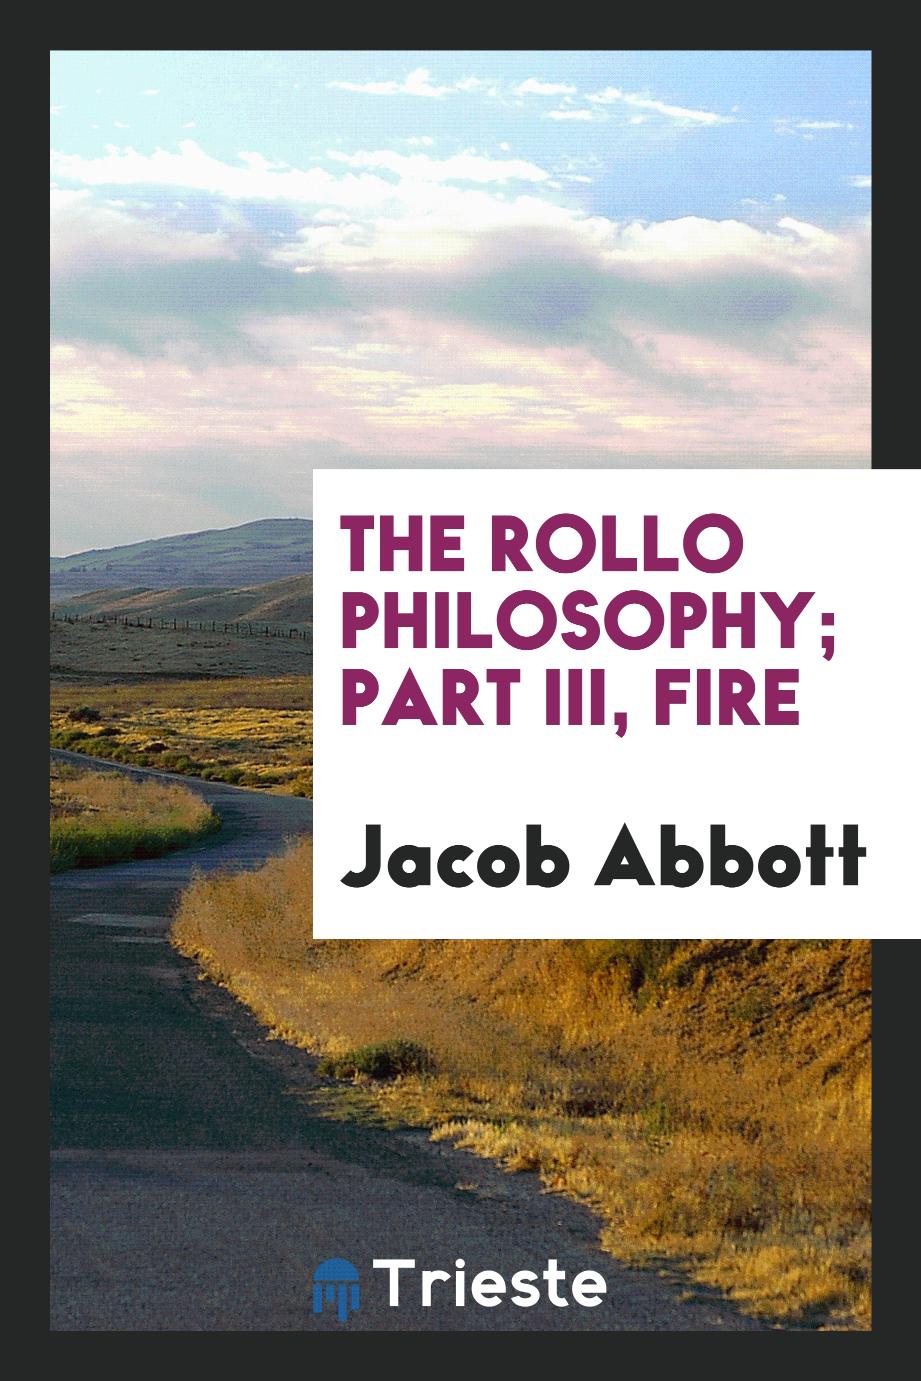 The Rollo philosophy; Part III, Fire